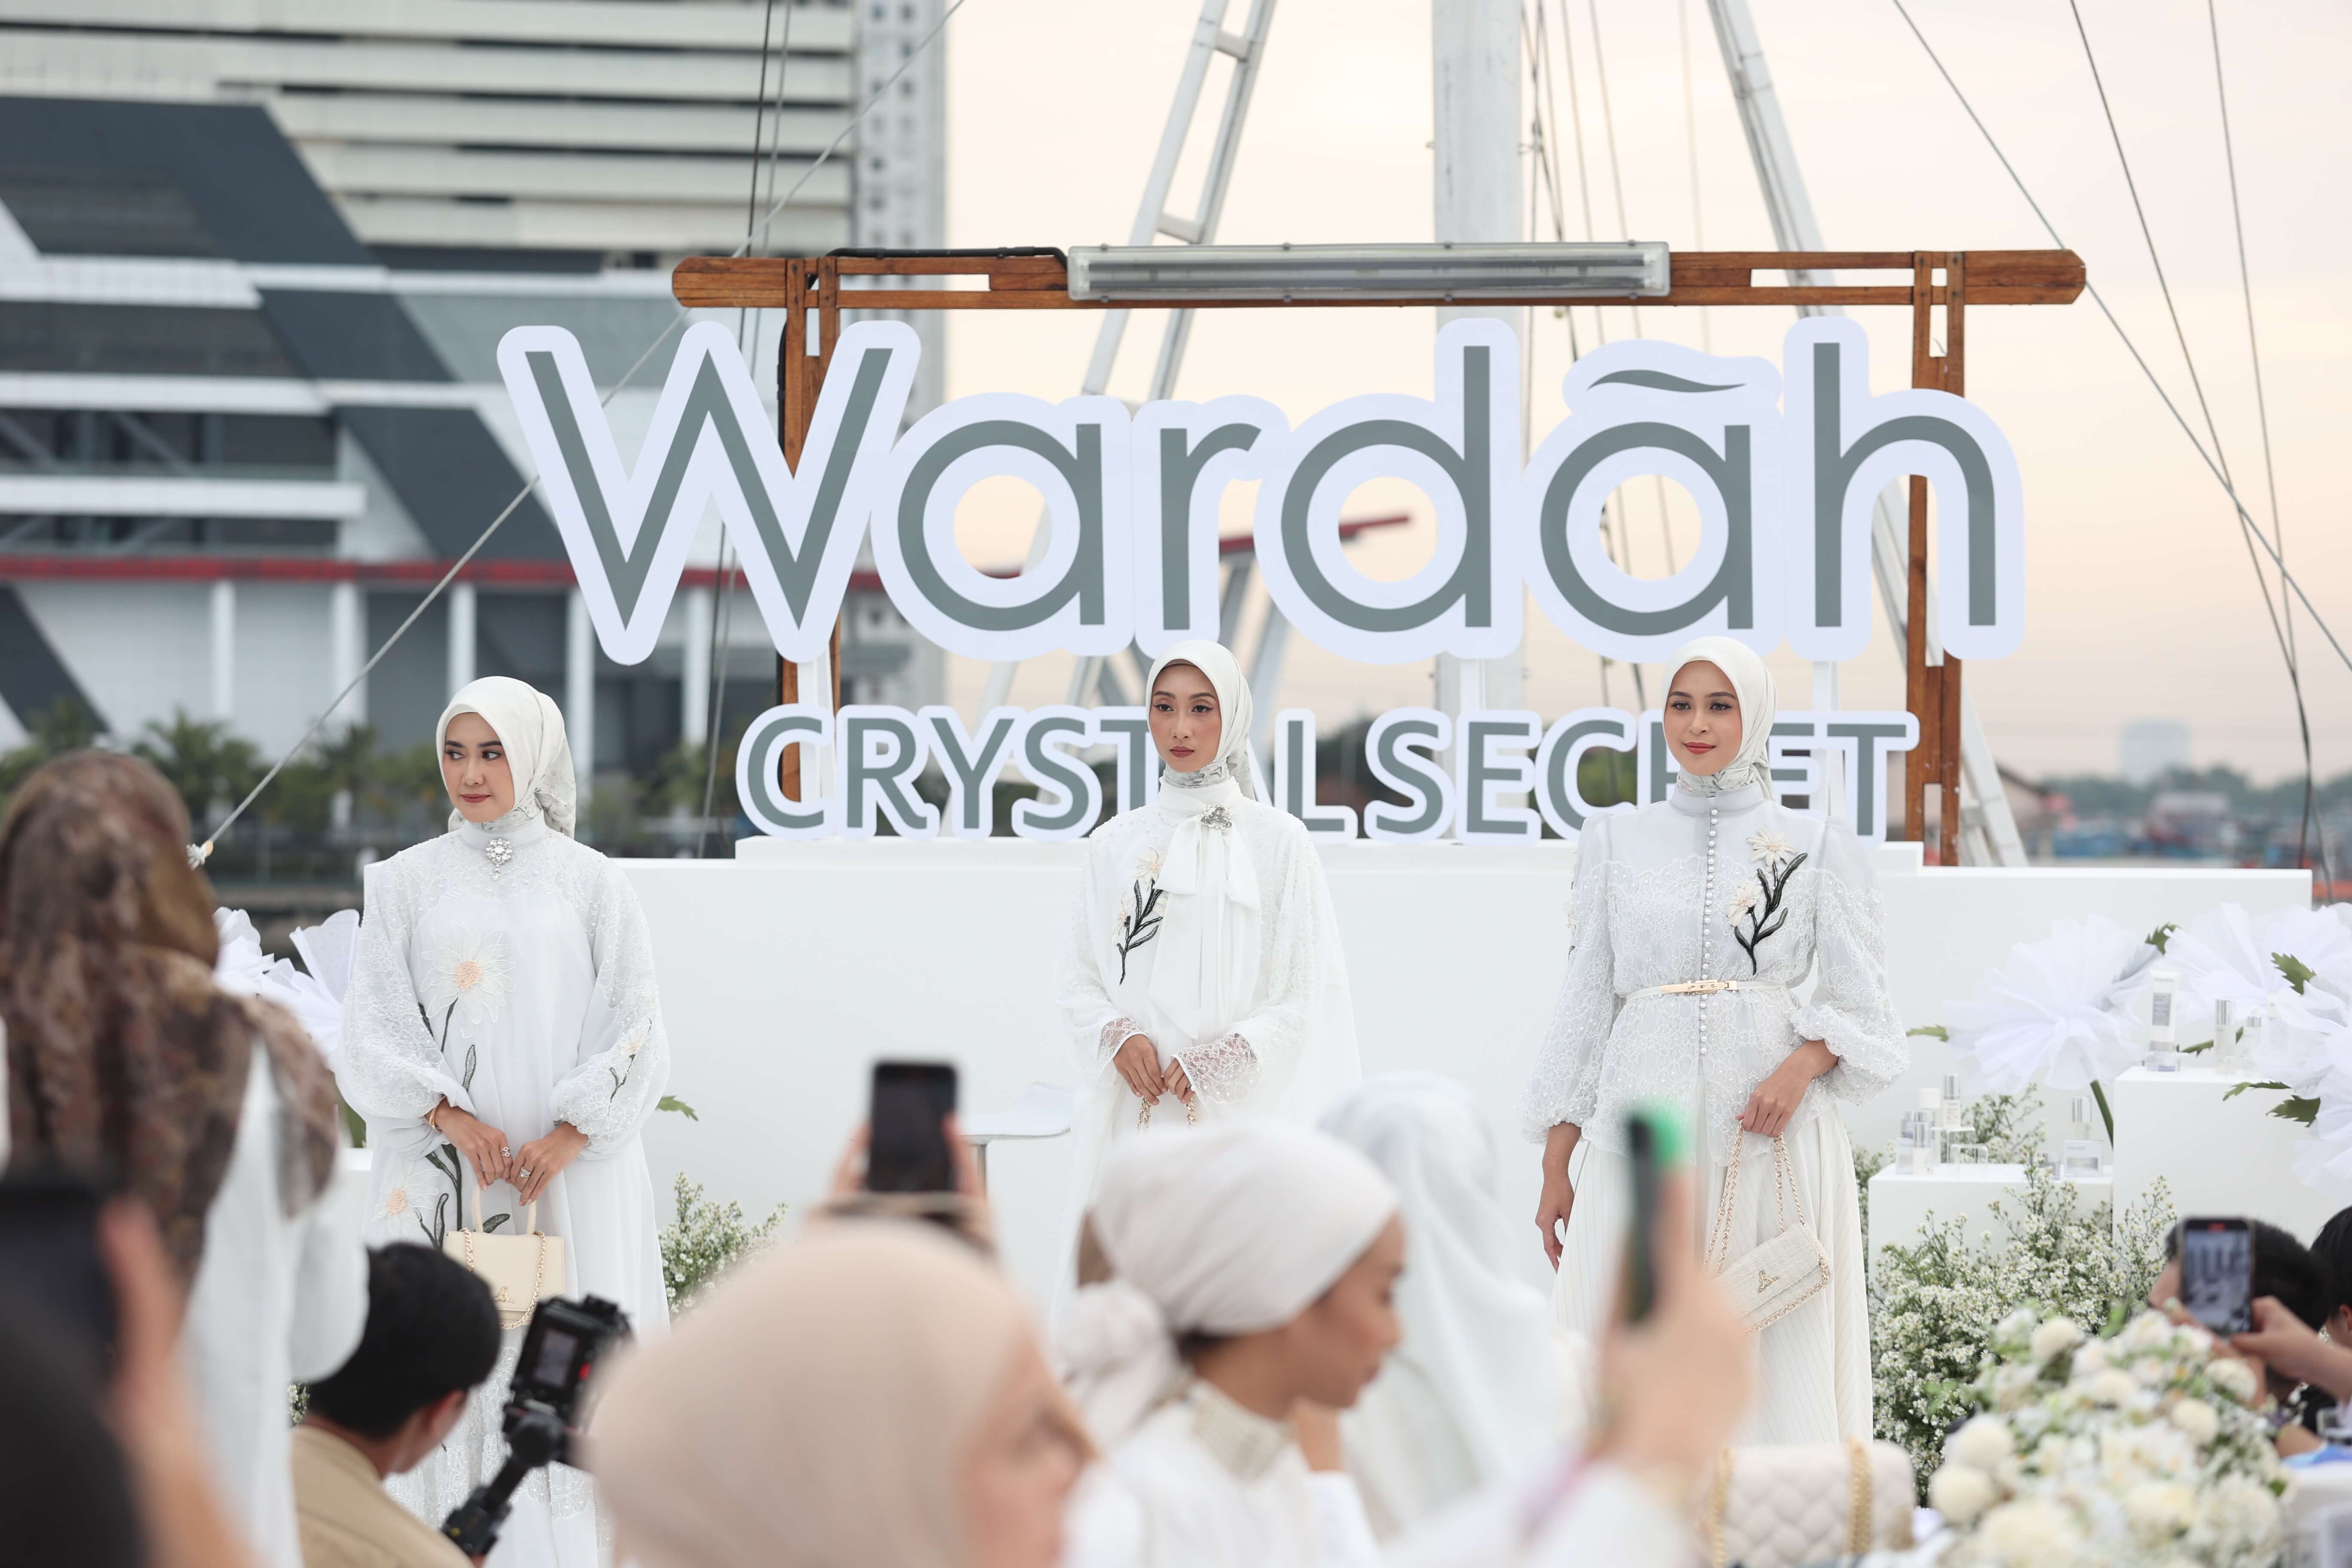 Wardah Crystal Secret